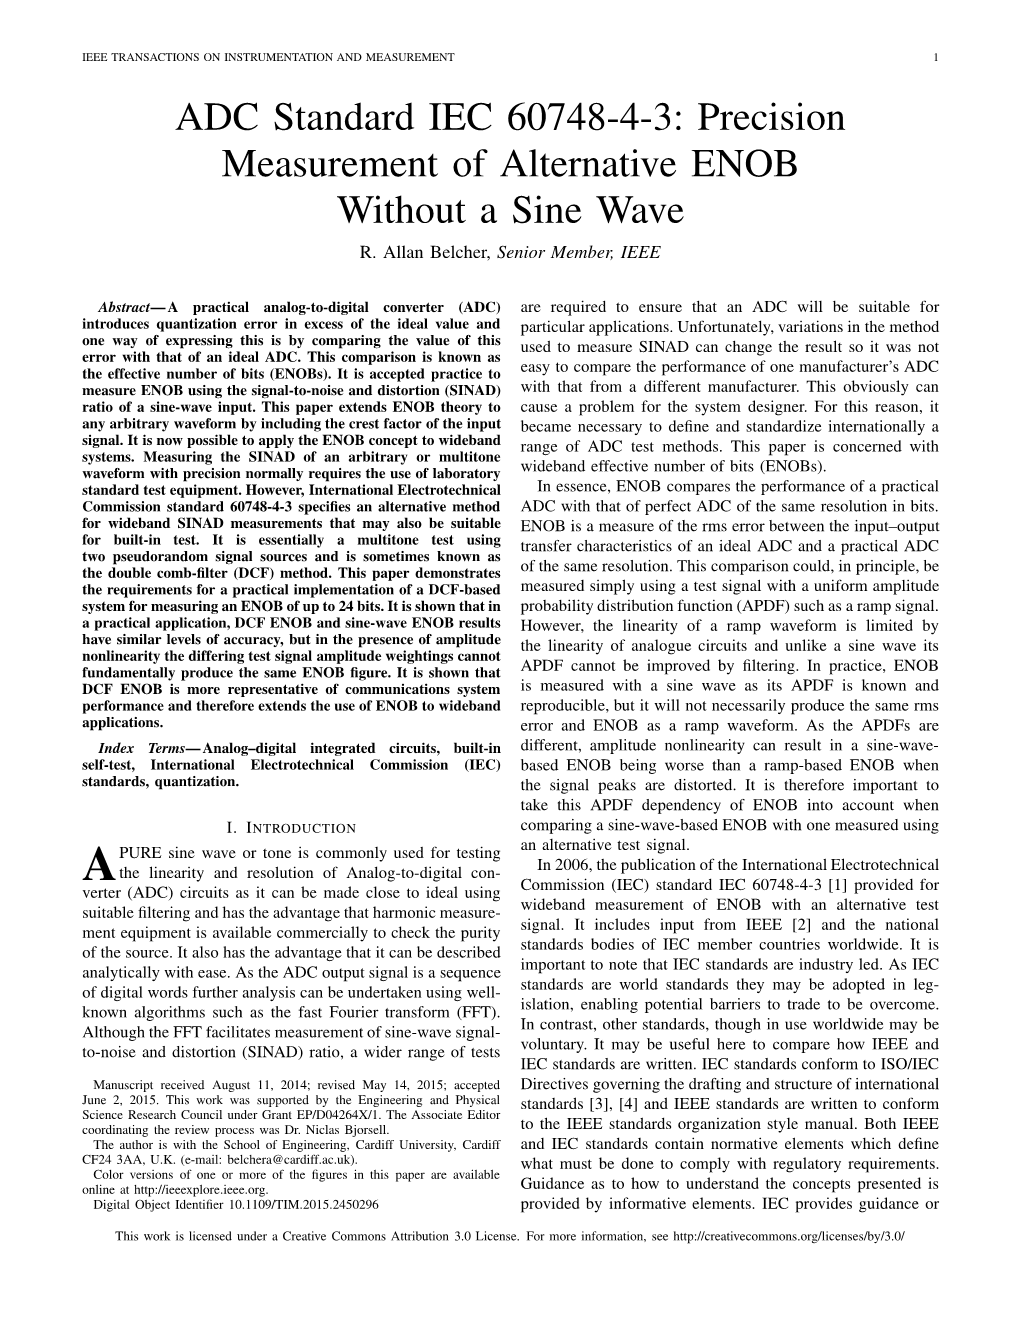 Precision Measurement of Alternative ENOB Without a Sine Wave R